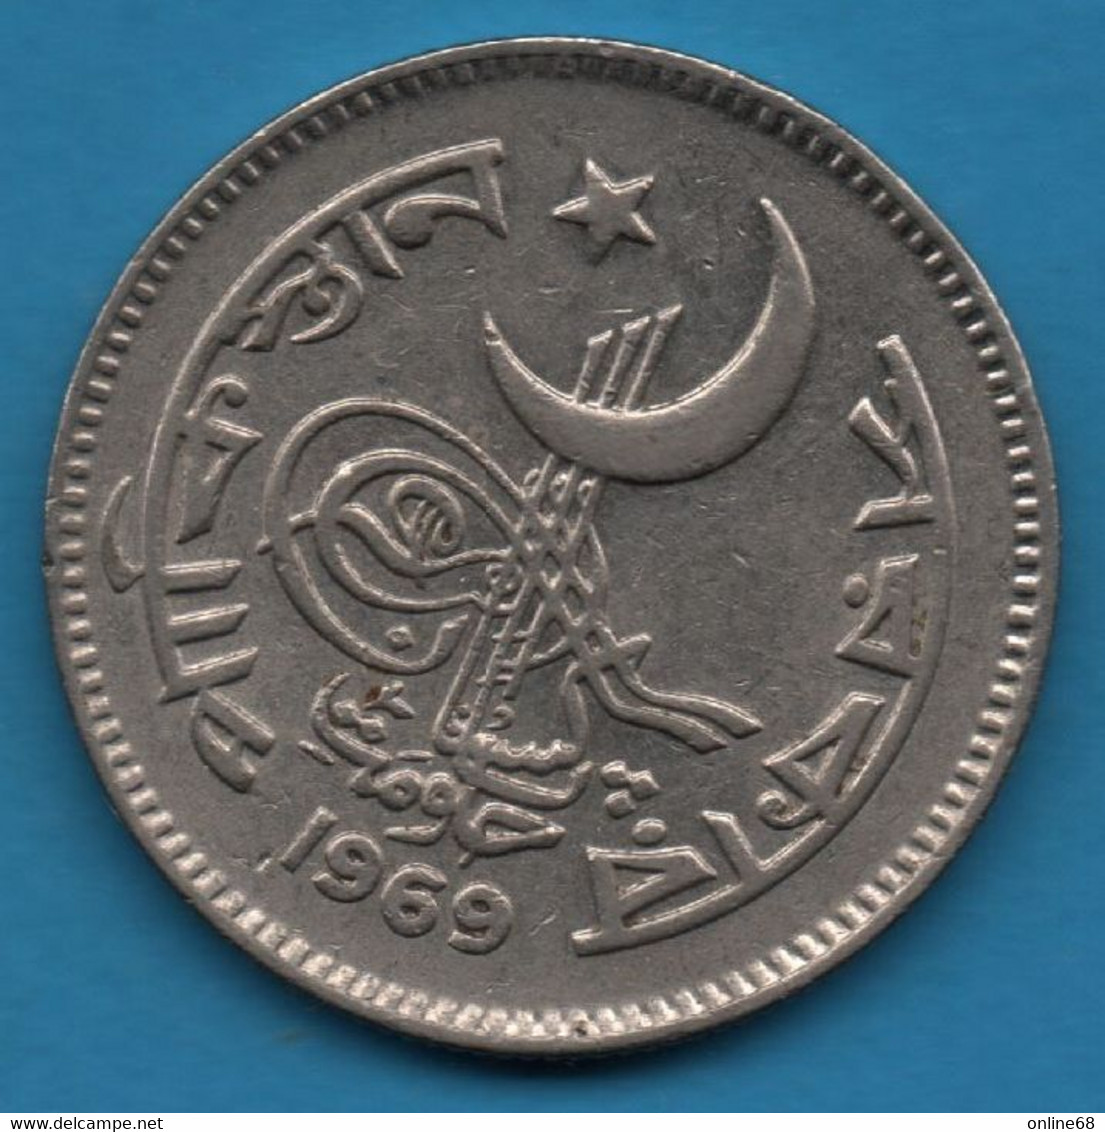 PAKISTAN 50 PAISA 1969 KM# 23 - Pakistán